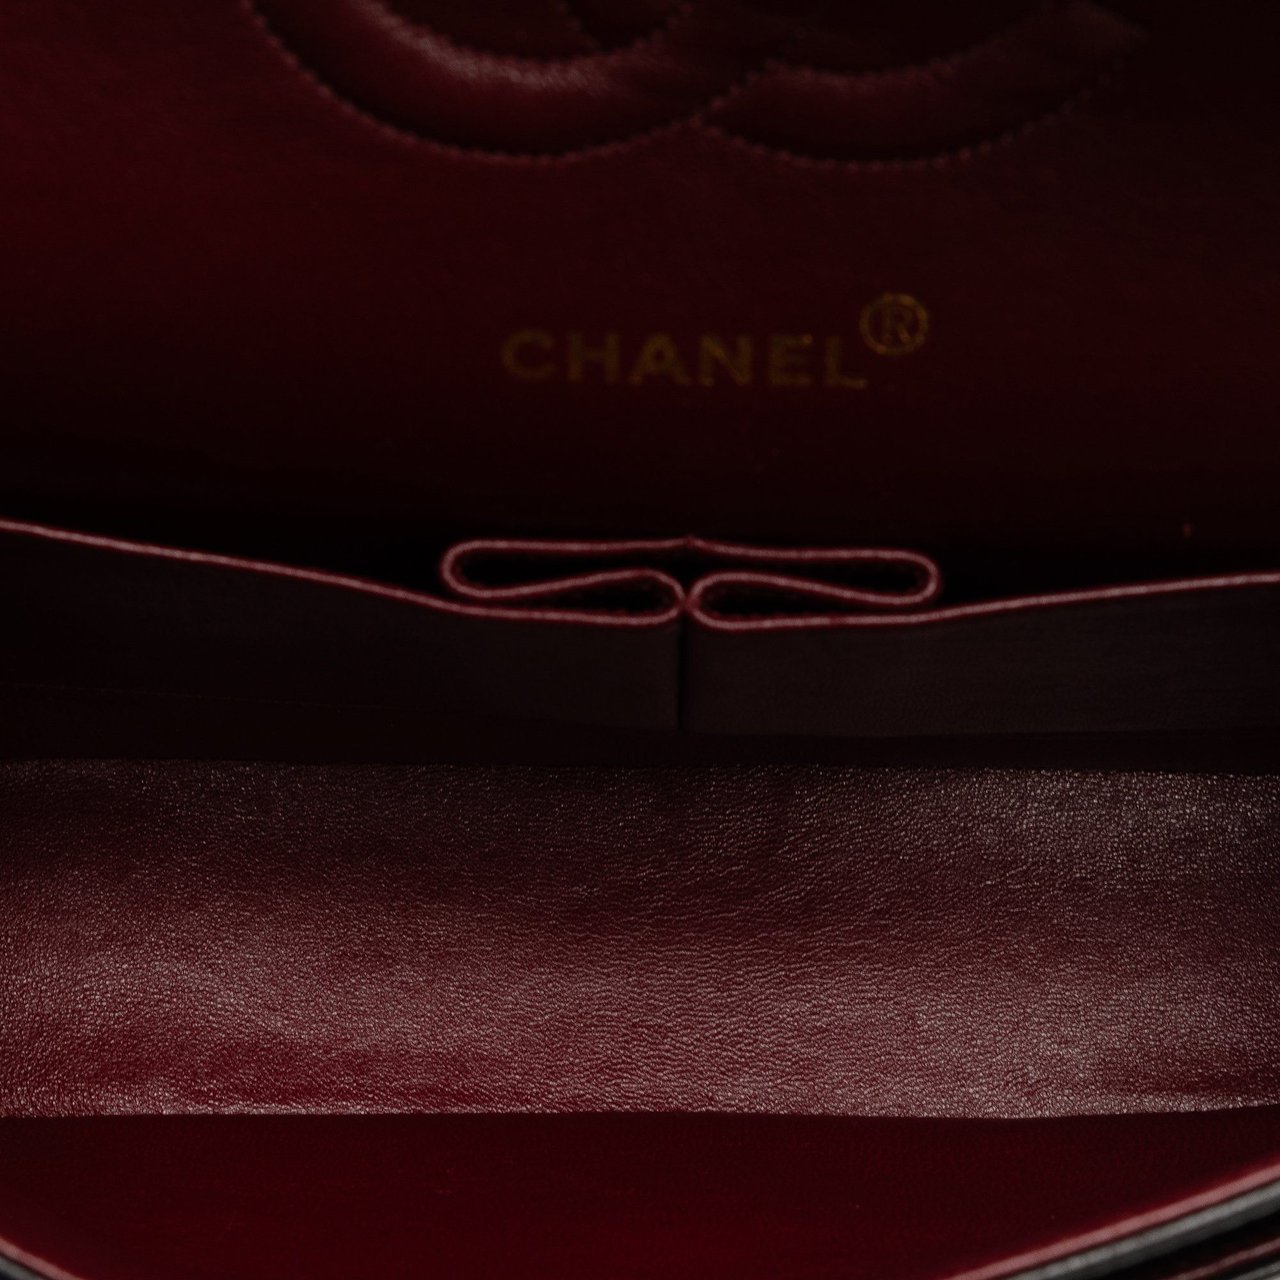 Chanel Medium Classic Lambskin Double Flap Zwart